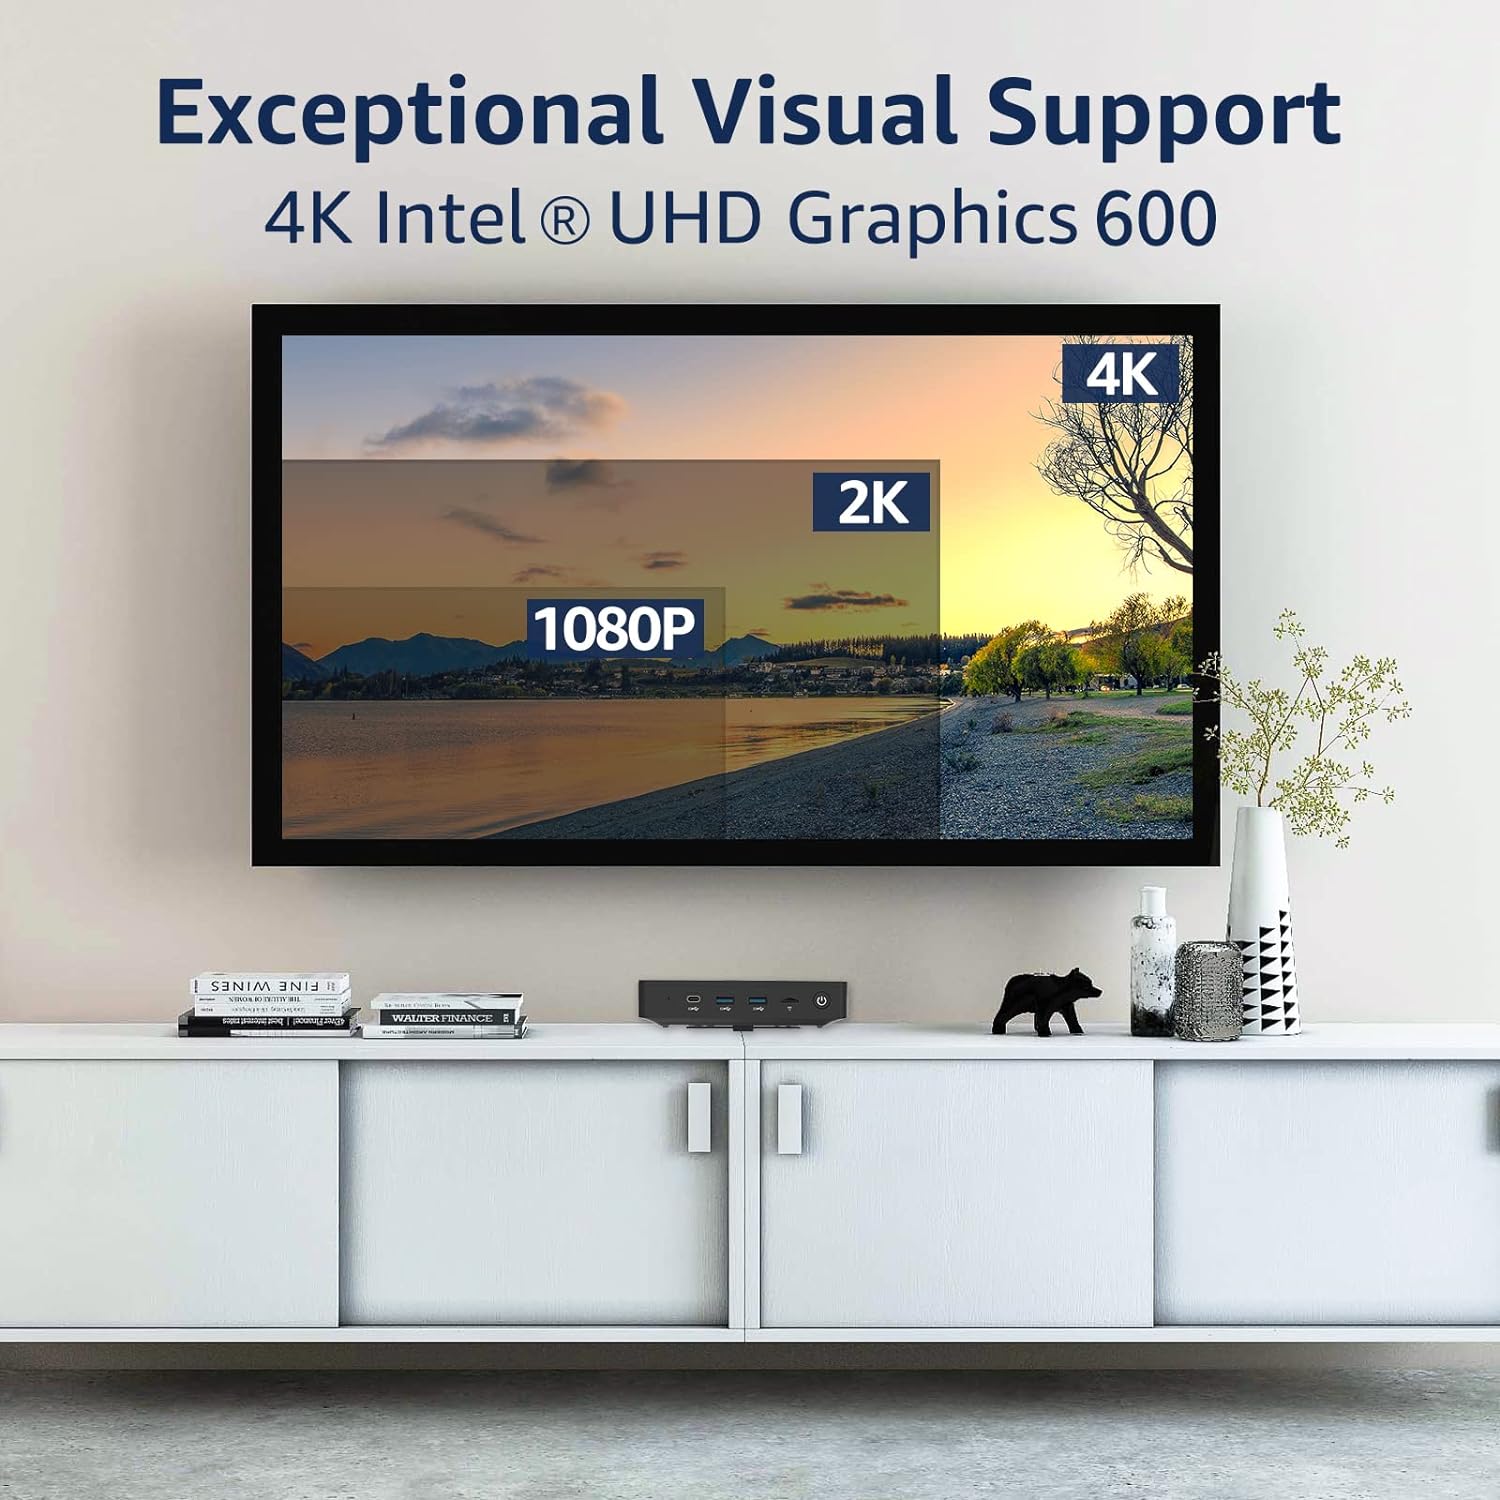 Wo-We Mini PC with Intel Celeron N4020 Processor, Intel UHD Graphics 600 Delivers 4K Crisp Visual expereience, Linux, Ubuntu-20.04.1,4GB RAM, 128GB eMMC (Intel Celeron N4020 -Linux)